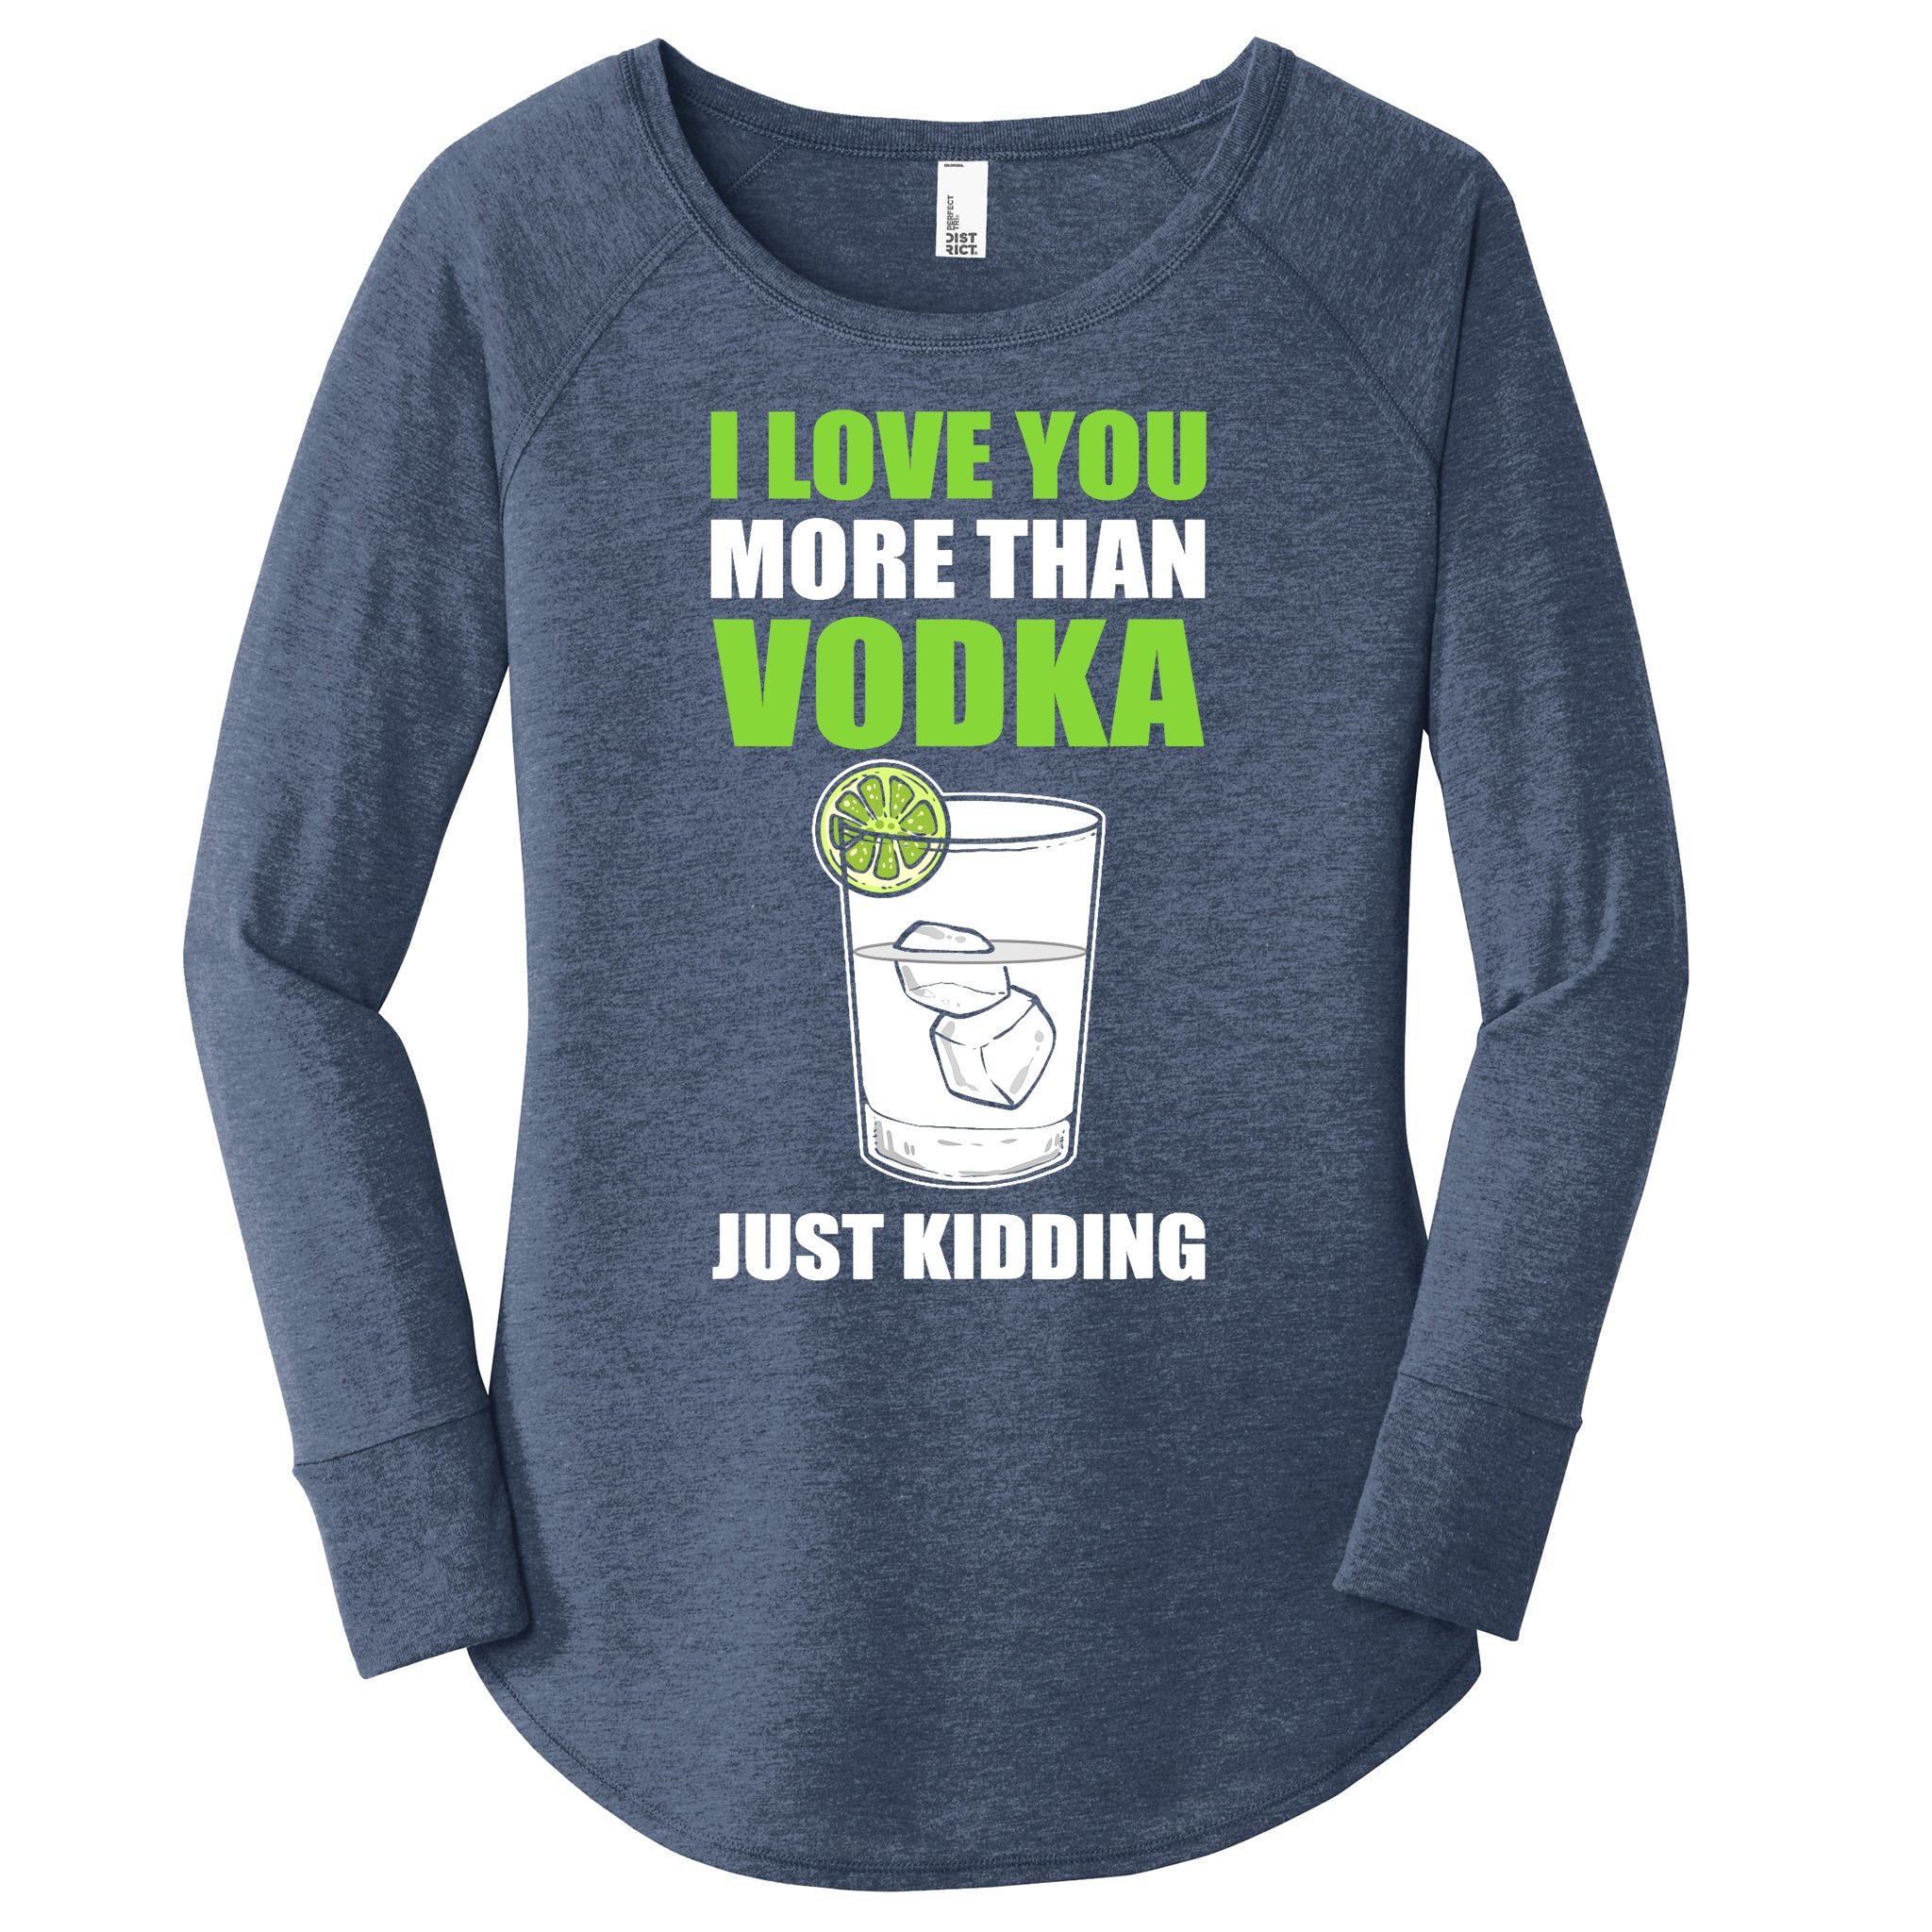 Love Vodka T-shirt